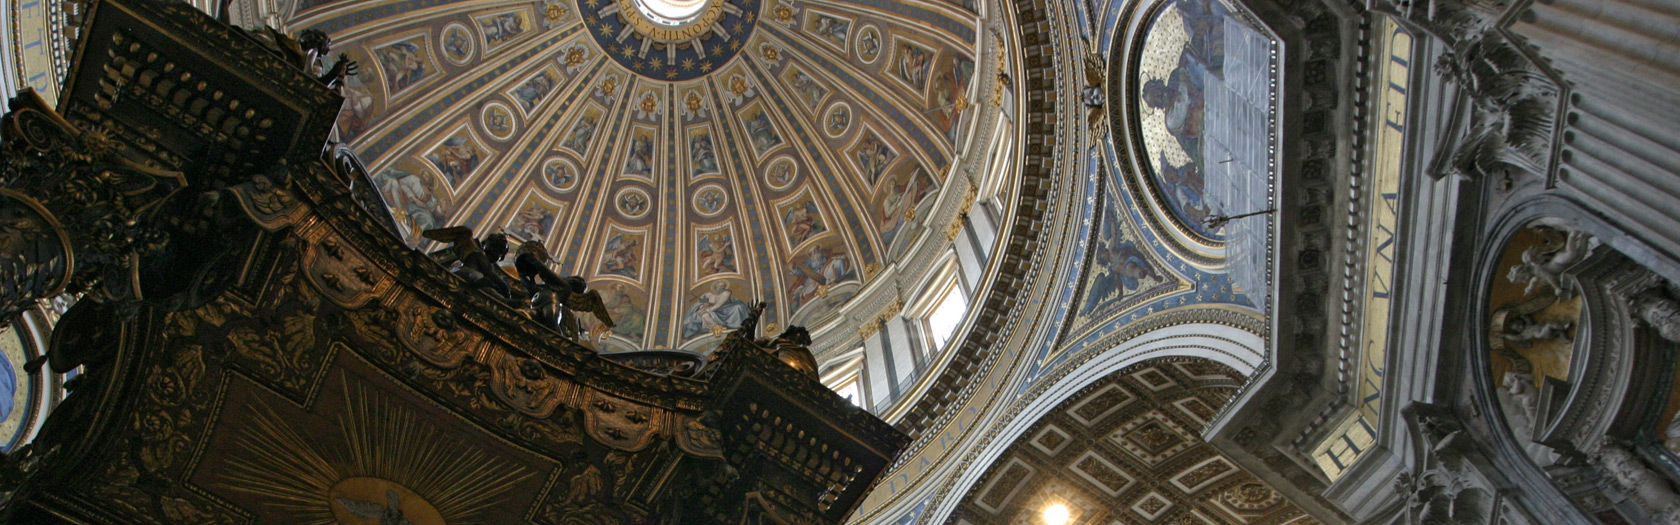 Im Inneren des Petersdoms in Rom